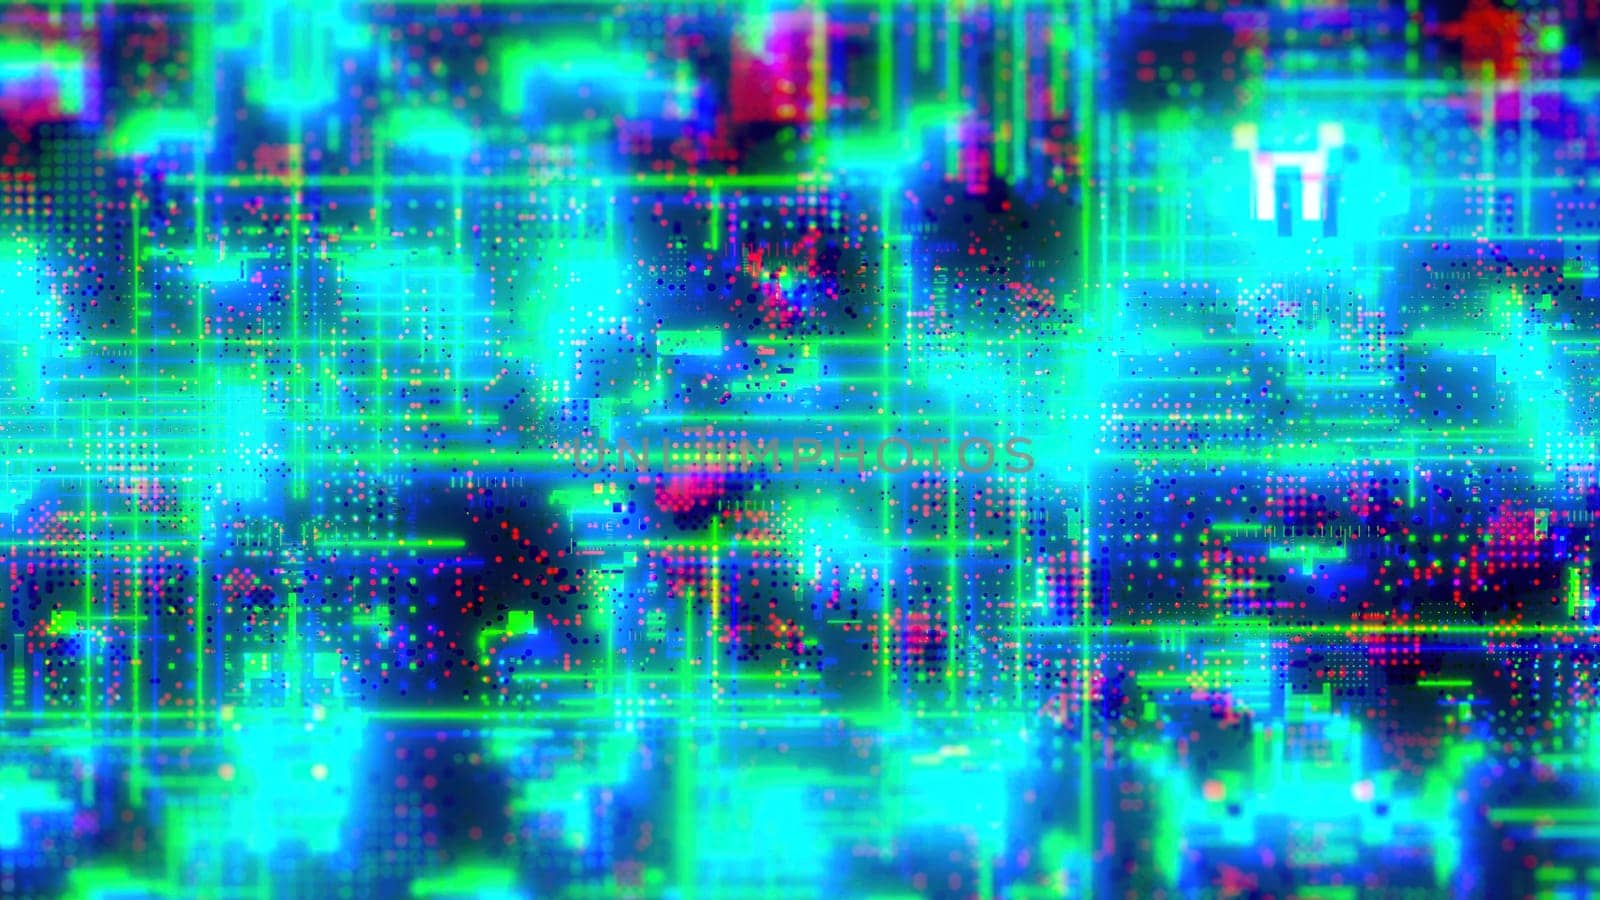 Cyberpunk technology background. Computer generated 3d render